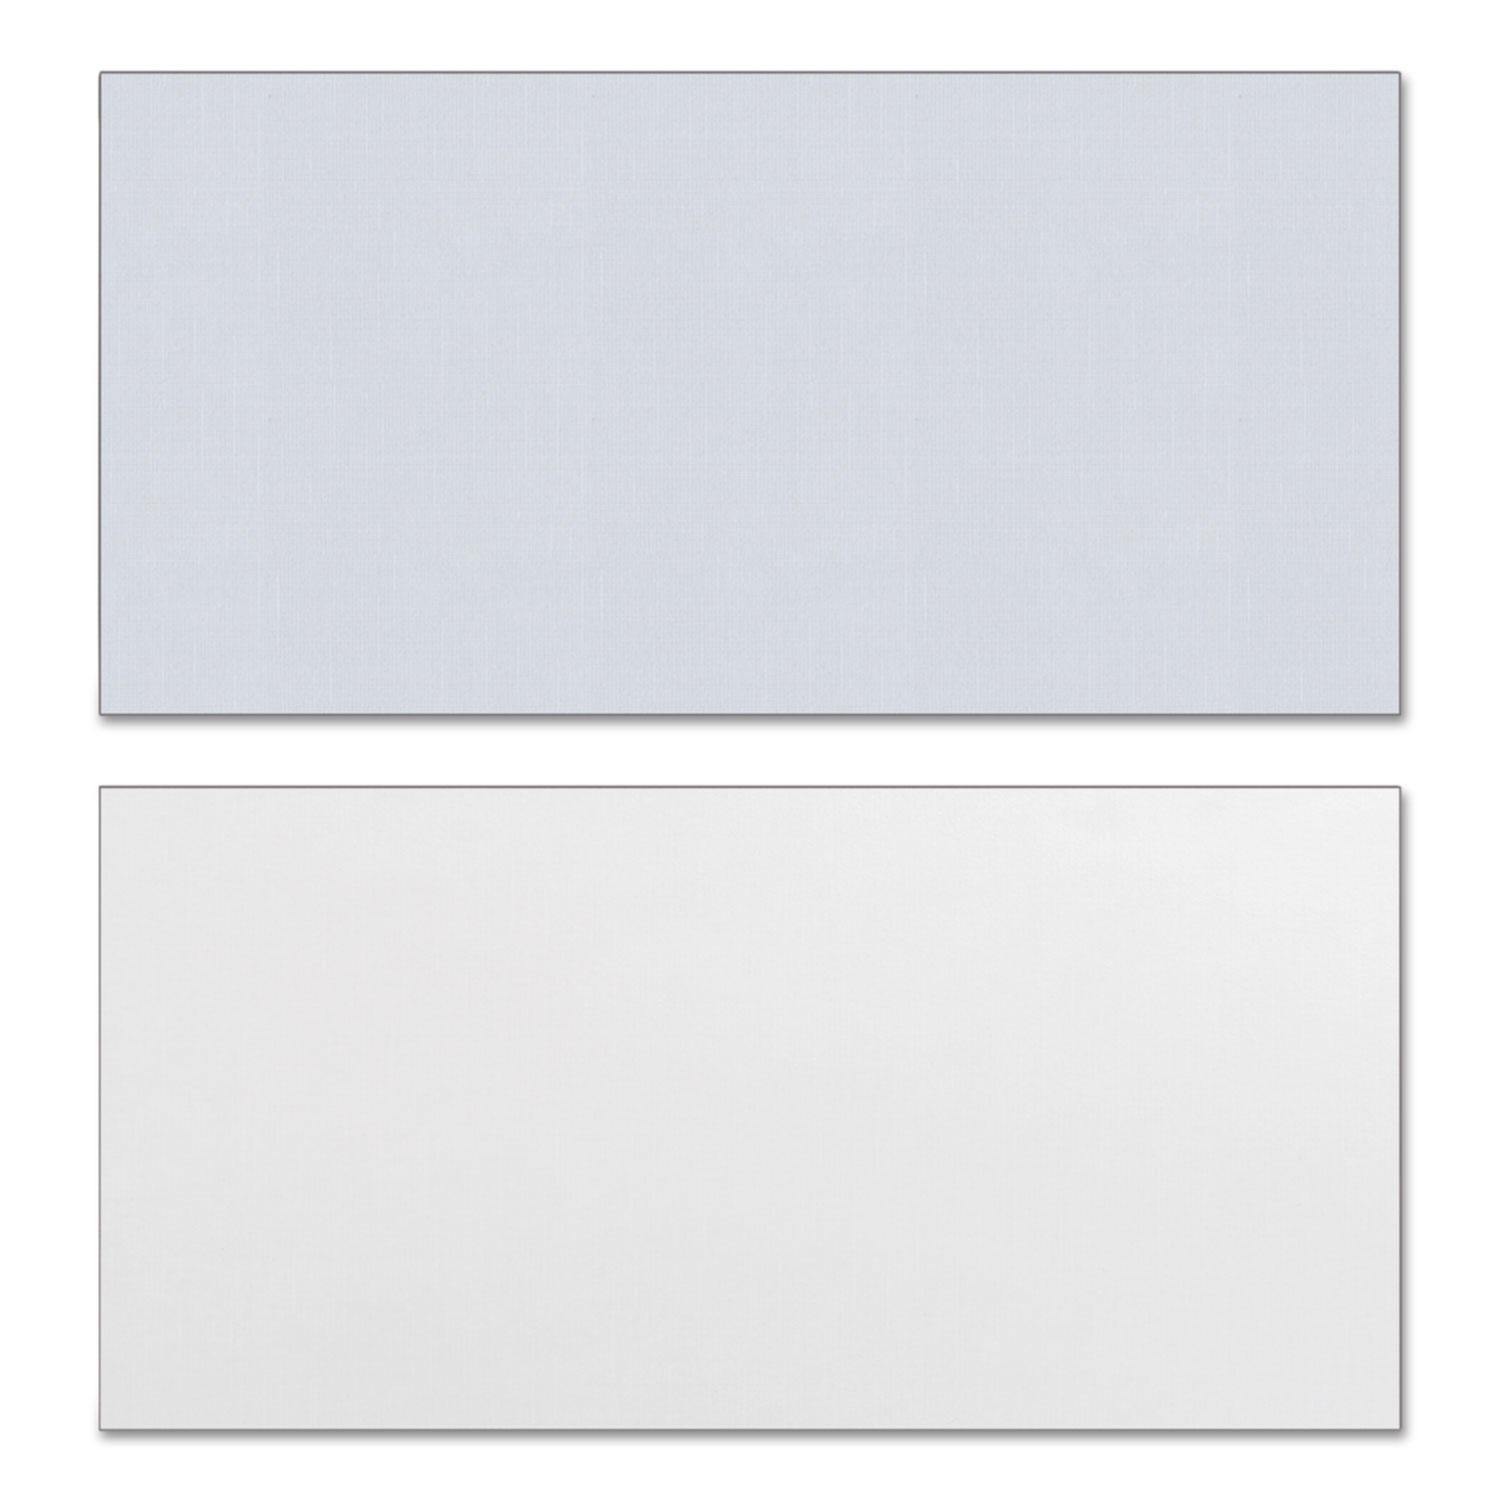 Reversible Laminate Table Top, Rectangular, 59 1/2w x 29 1/2d, White/Gray